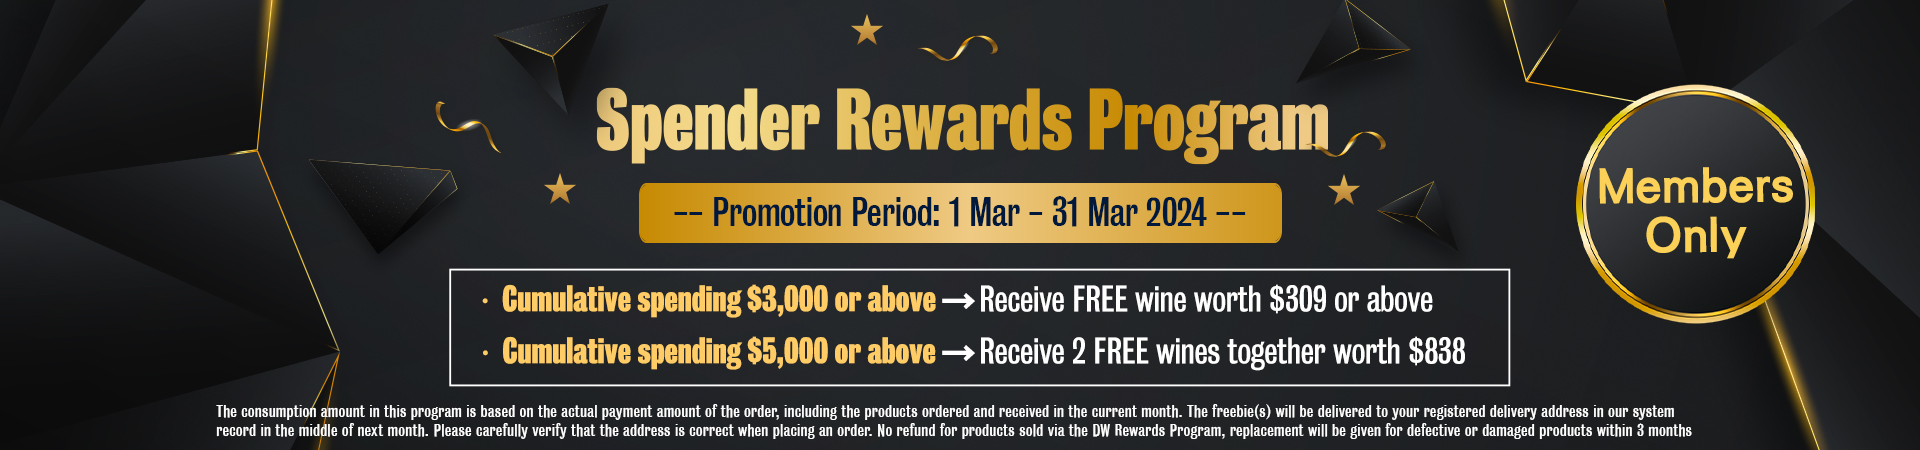 DW Rewards Program